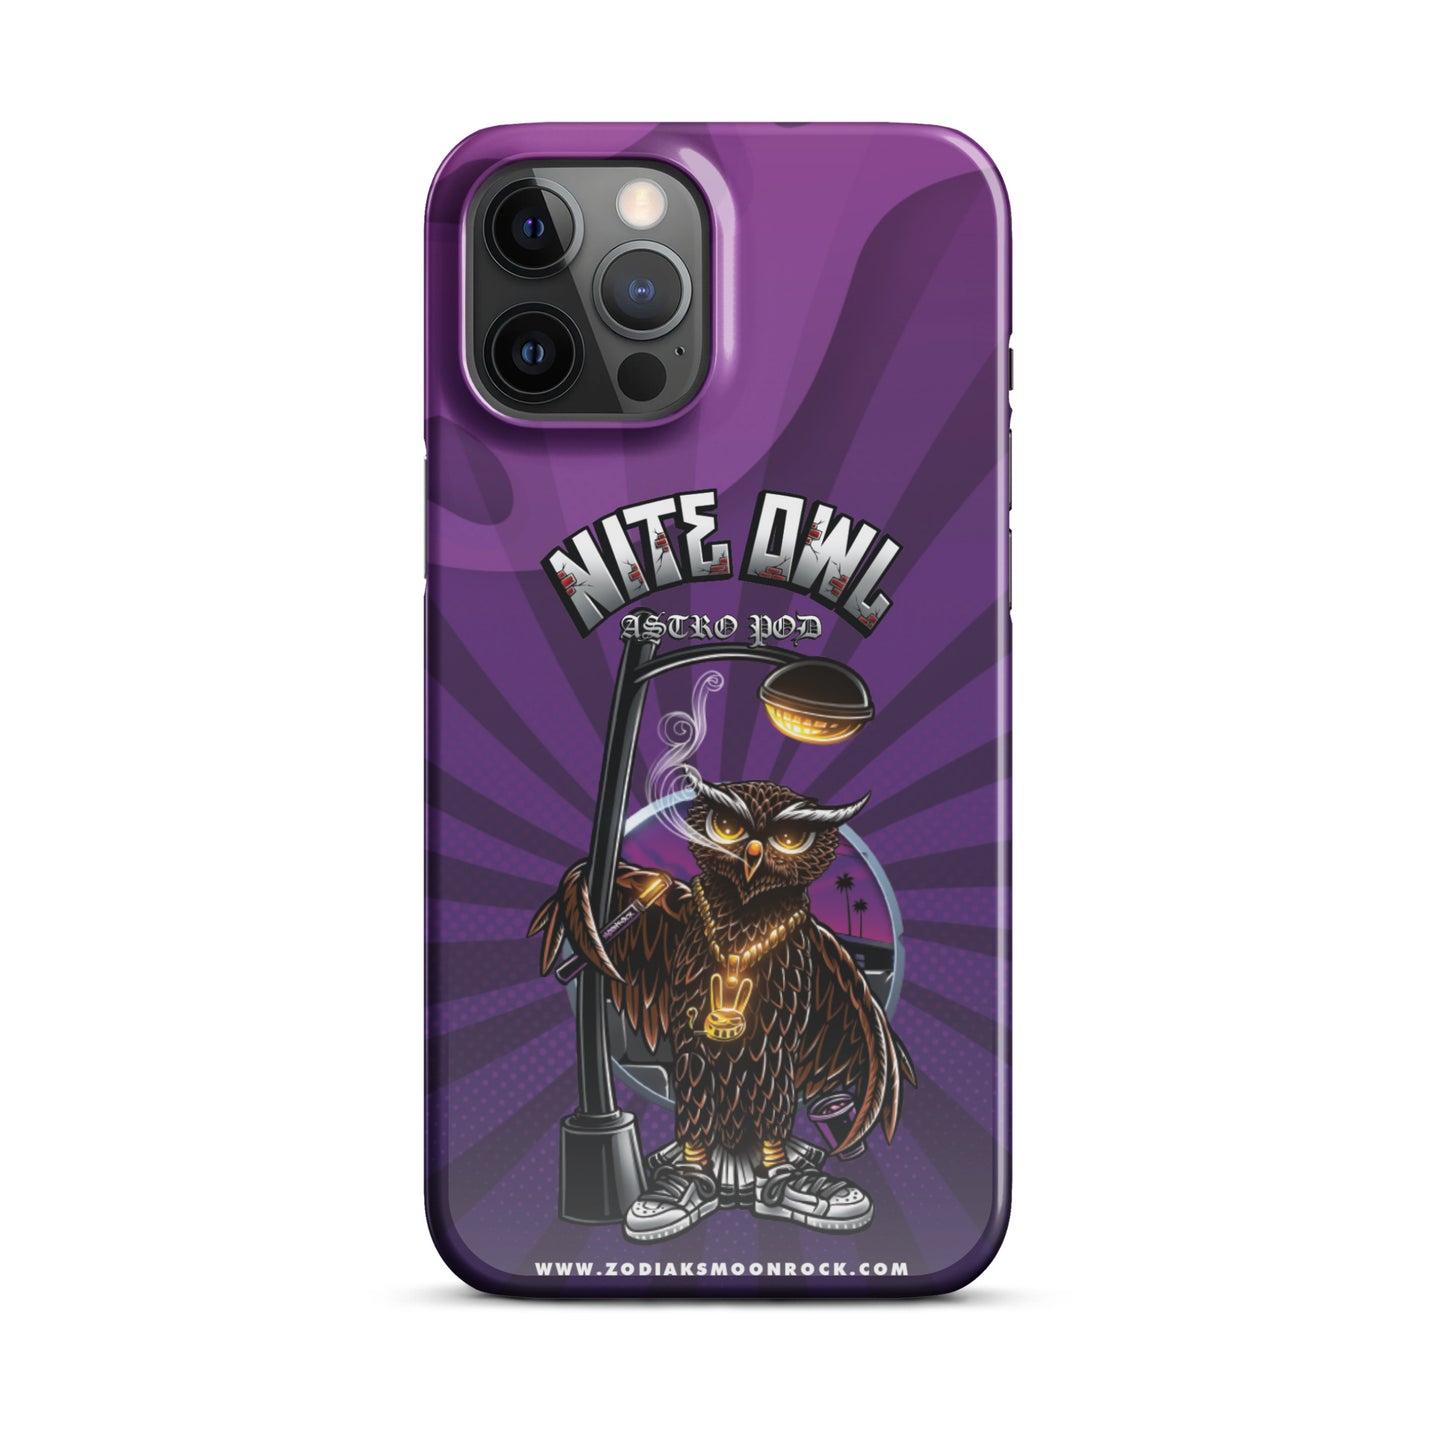 Dr. Zodiak's Moonrock - Nite Owl - Snap case for iPhone®